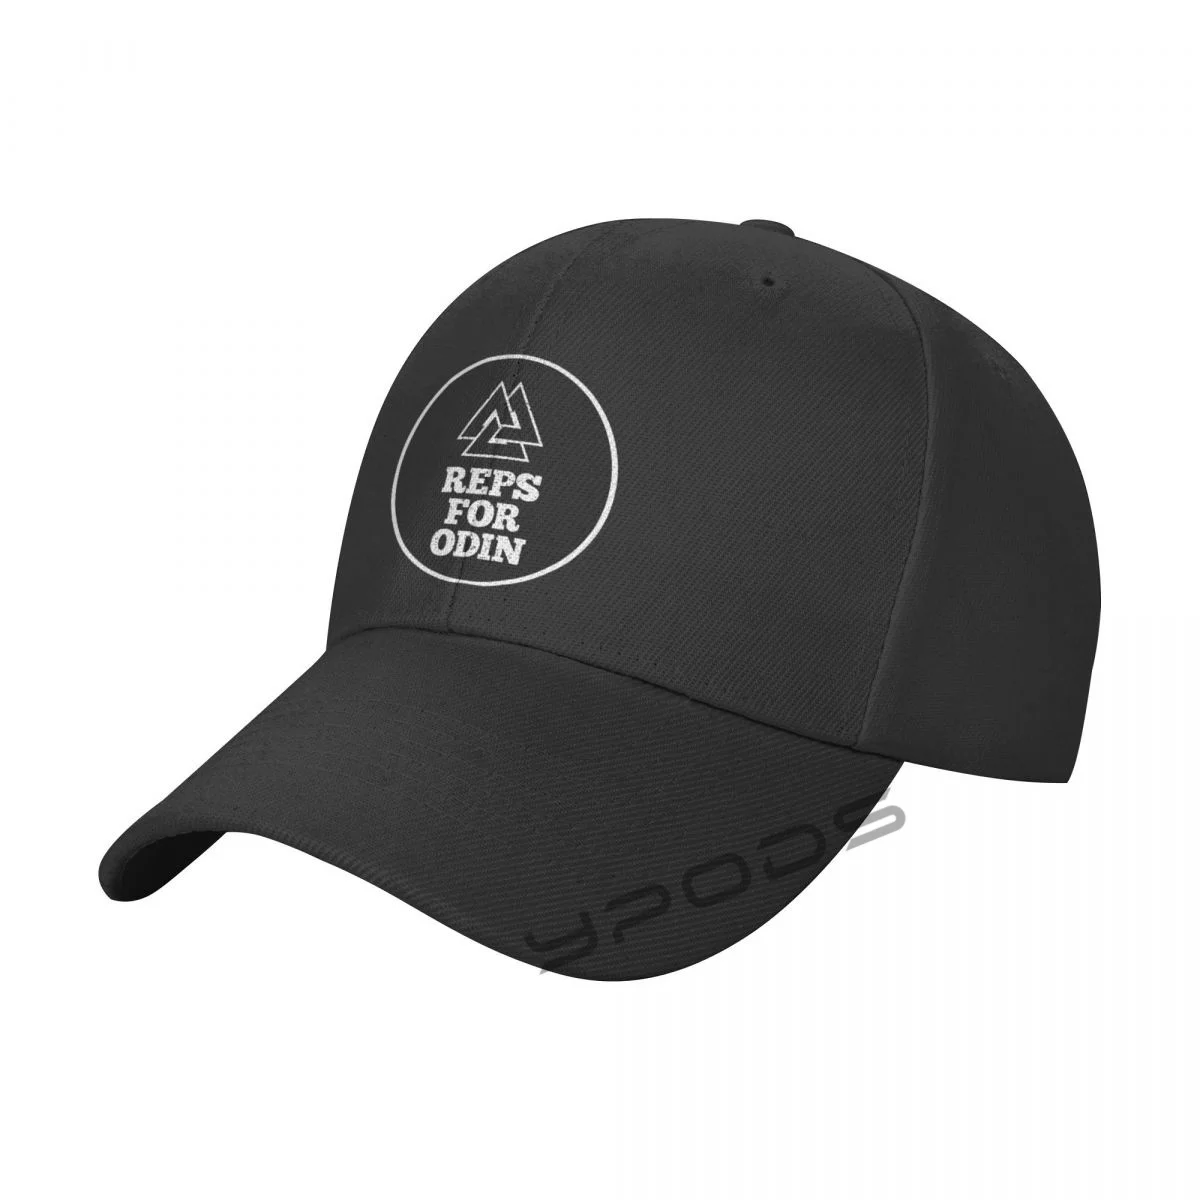 

Men's Baseball Caps Reps For Odin Women Summer Snapback Cap Adjustable Outdoor Sport Sun Hat